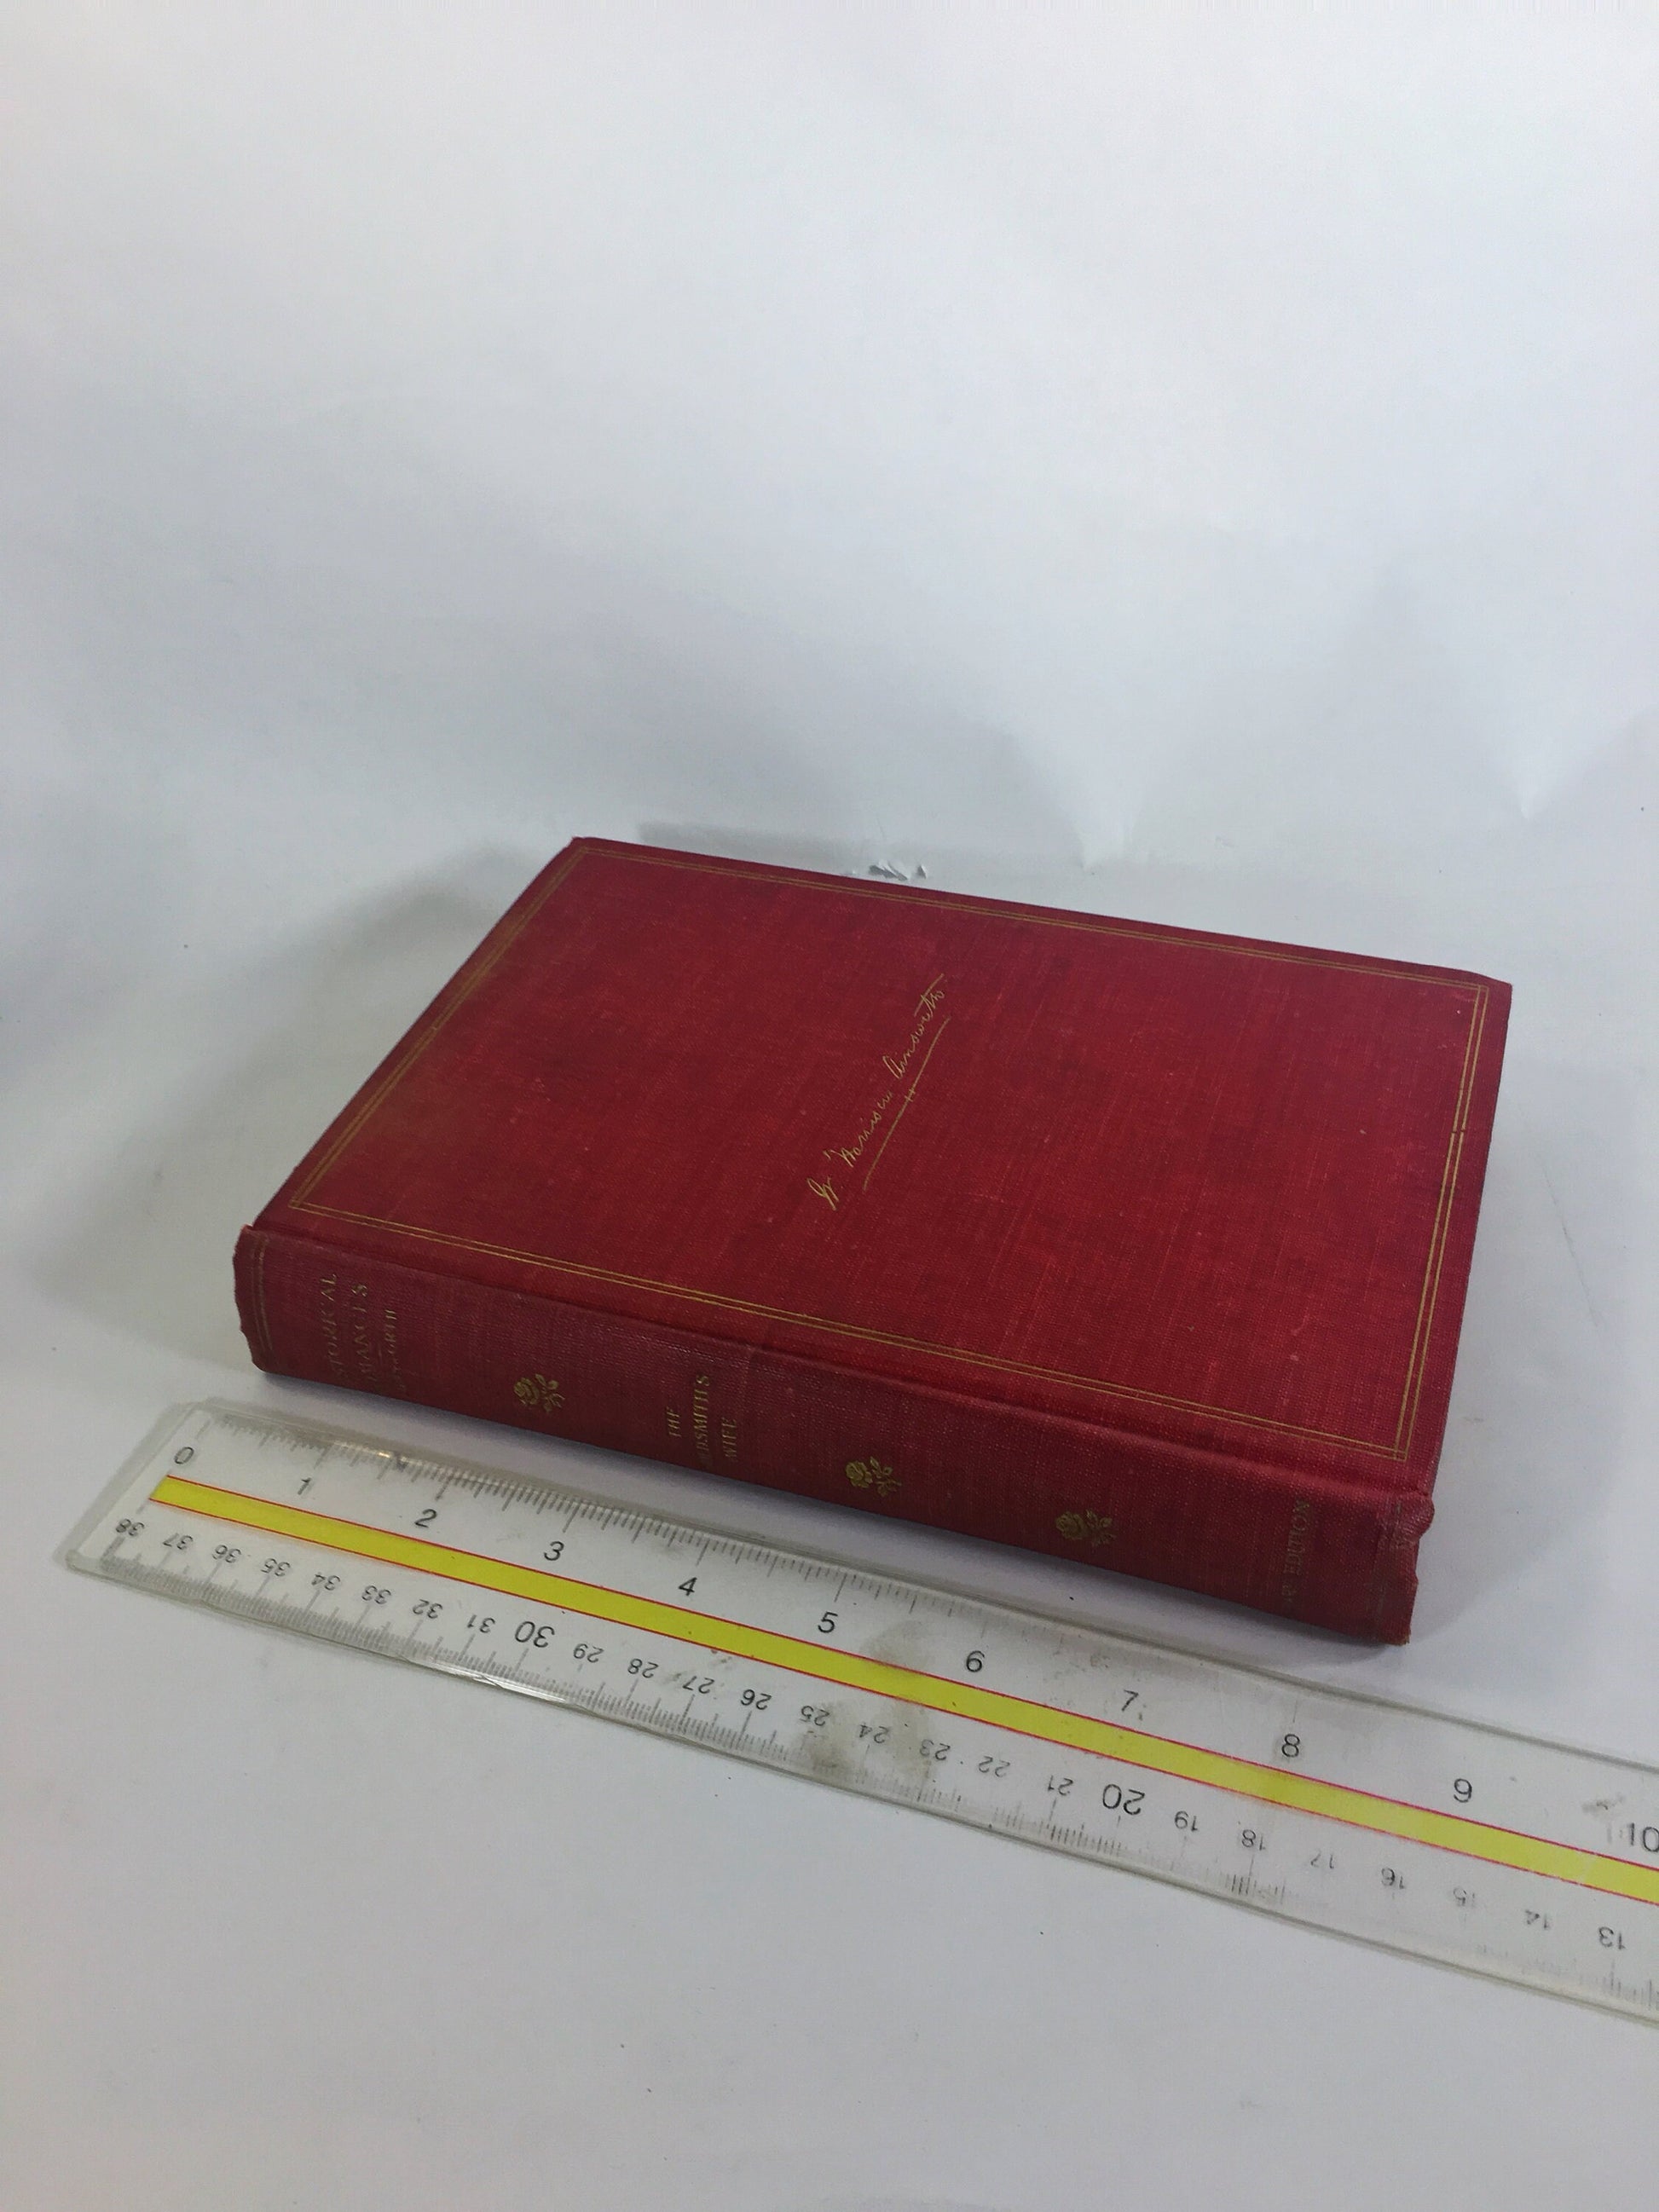 1841 Historical Romances of William Harrison Ainsworth Vintage book Jane Shore, King Edward IV mistress GORGEOUS antique red cloth